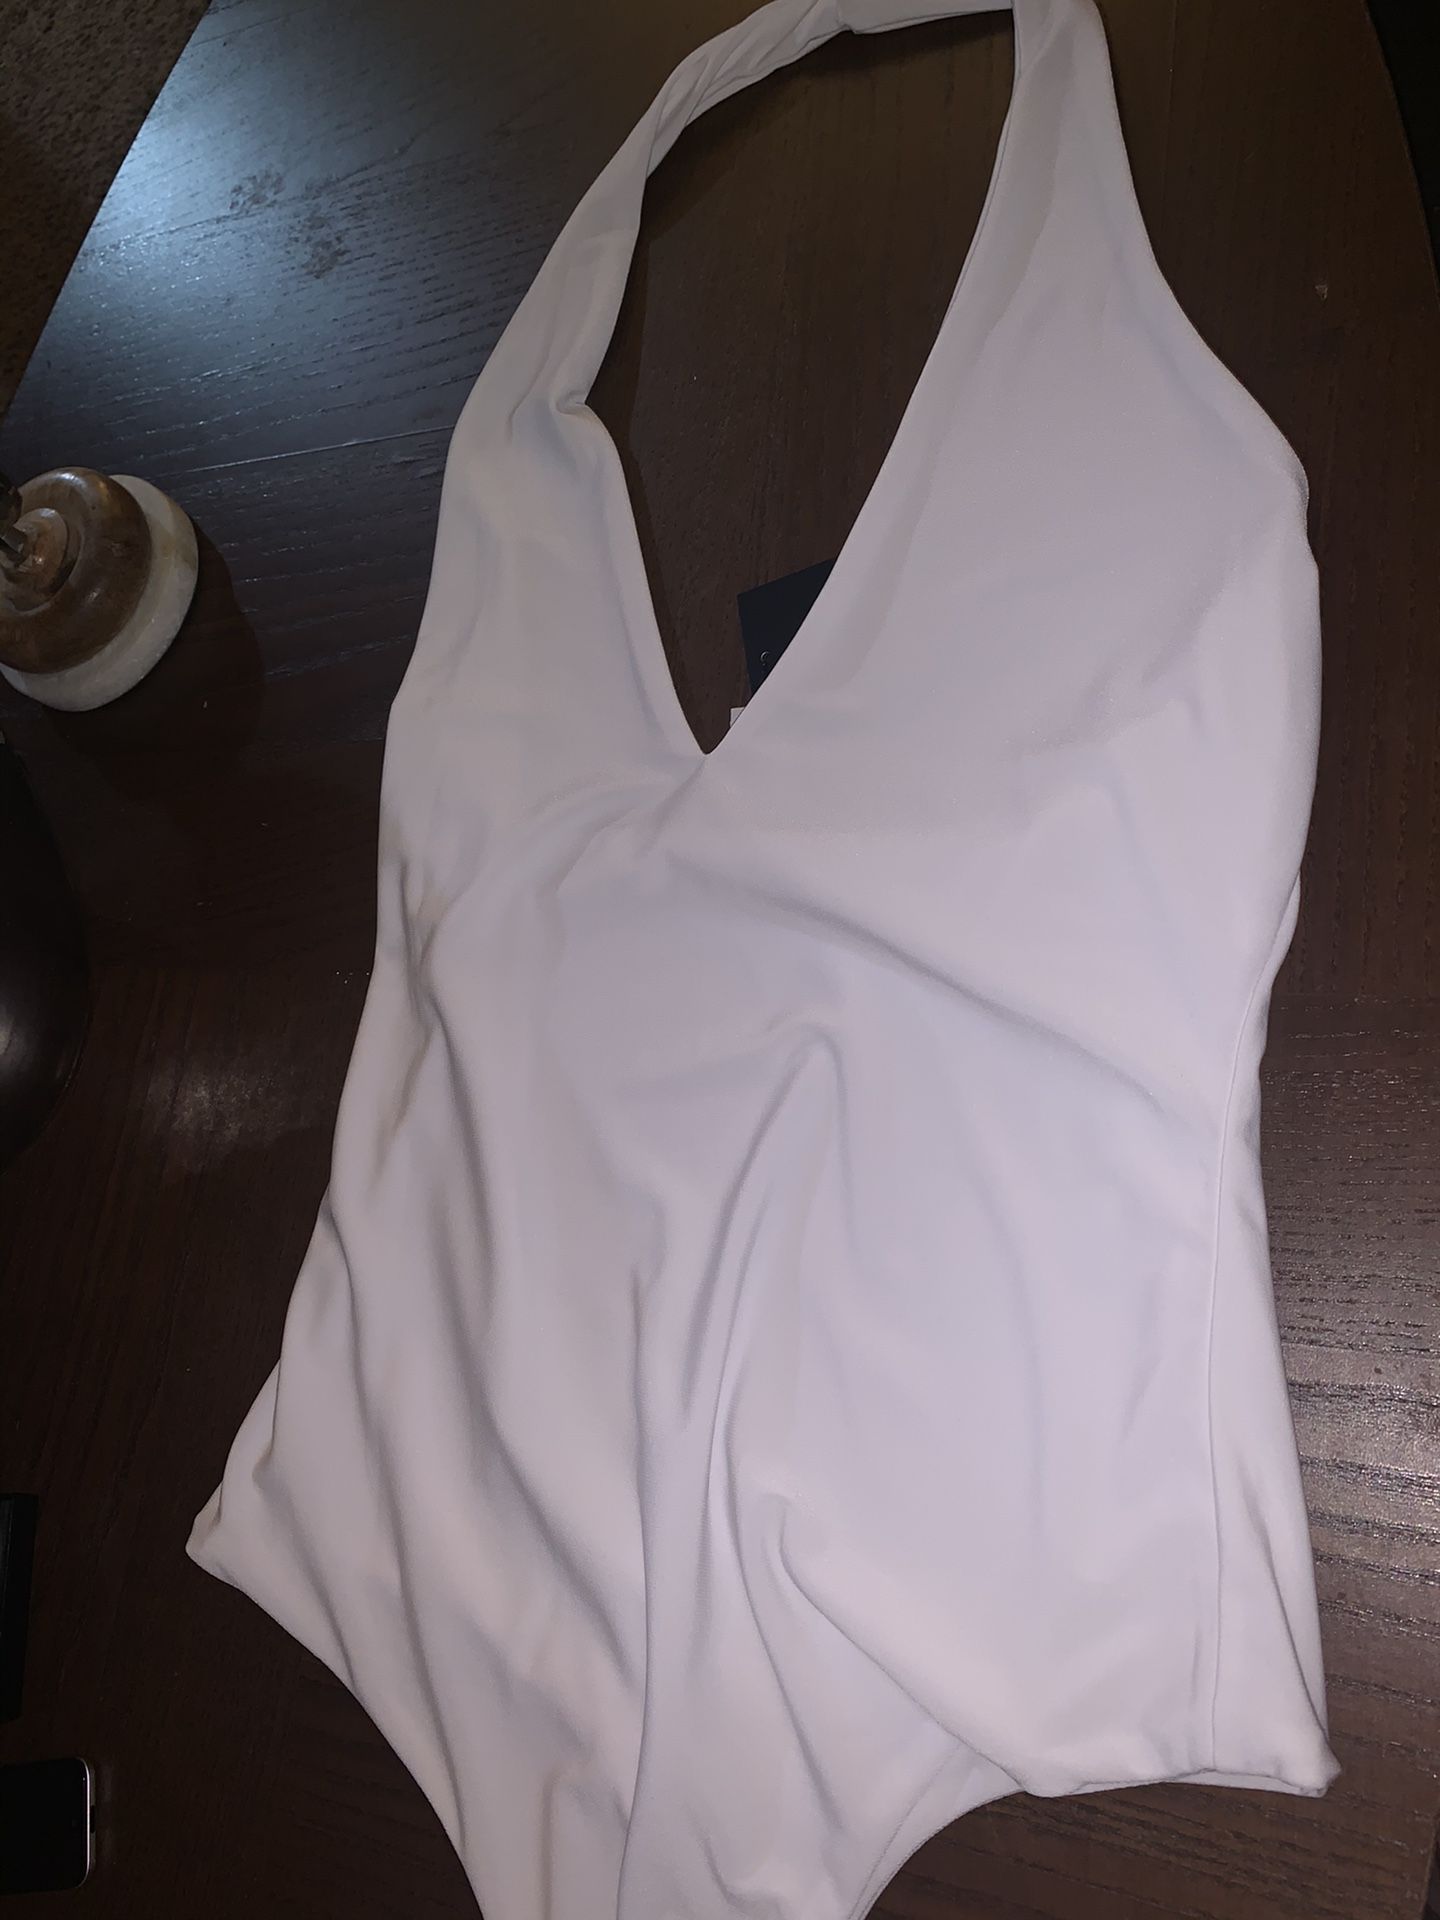 White Tokyo bodysuit